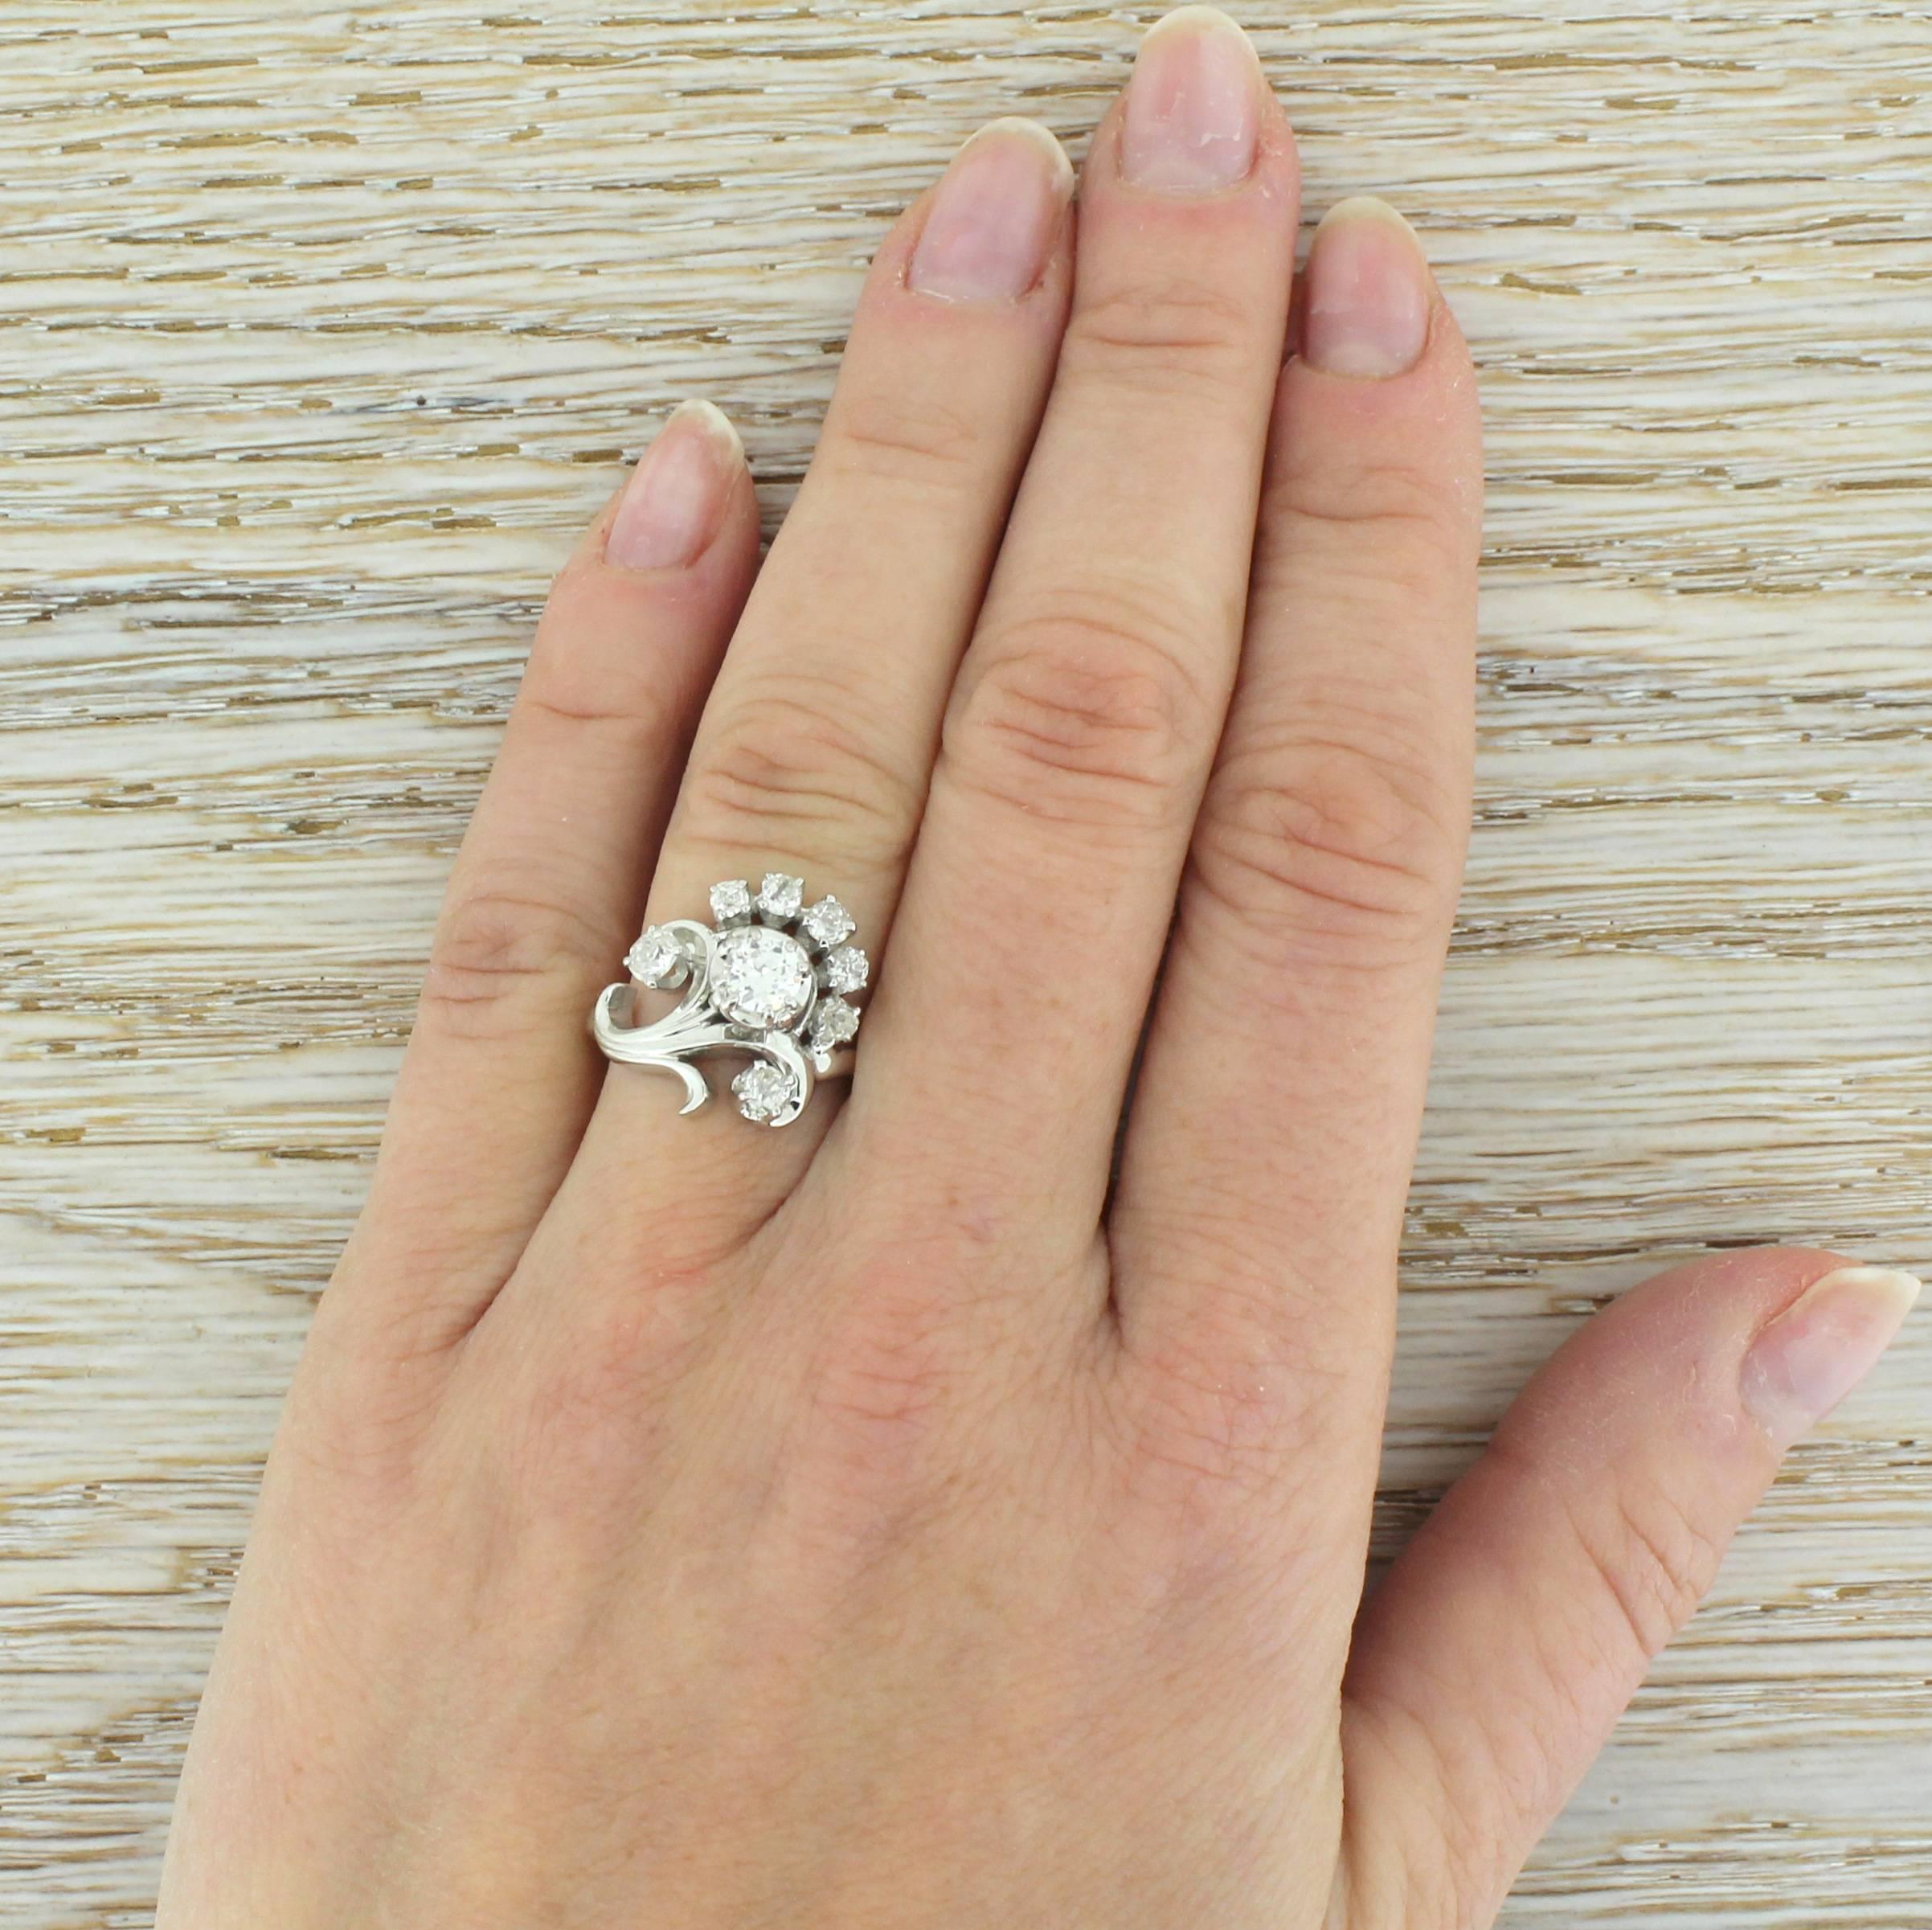 Women's Jabel 1.03 Carat Old Cut Diamond “Flower” Ring